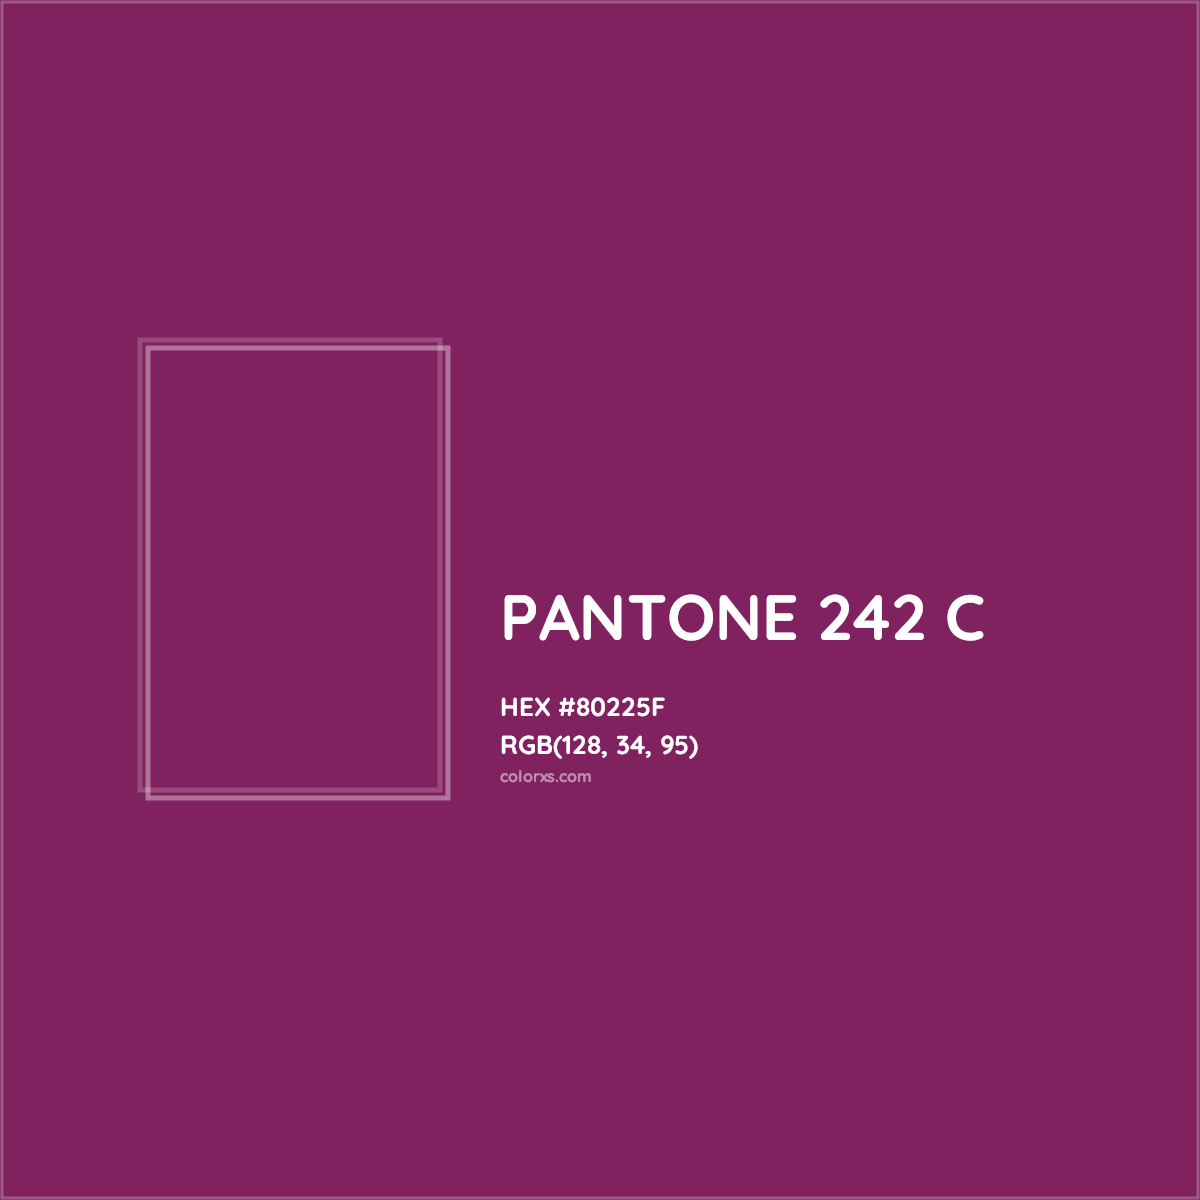 HEX #80225F PANTONE 242 C CMS Pantone PMS - Color Code